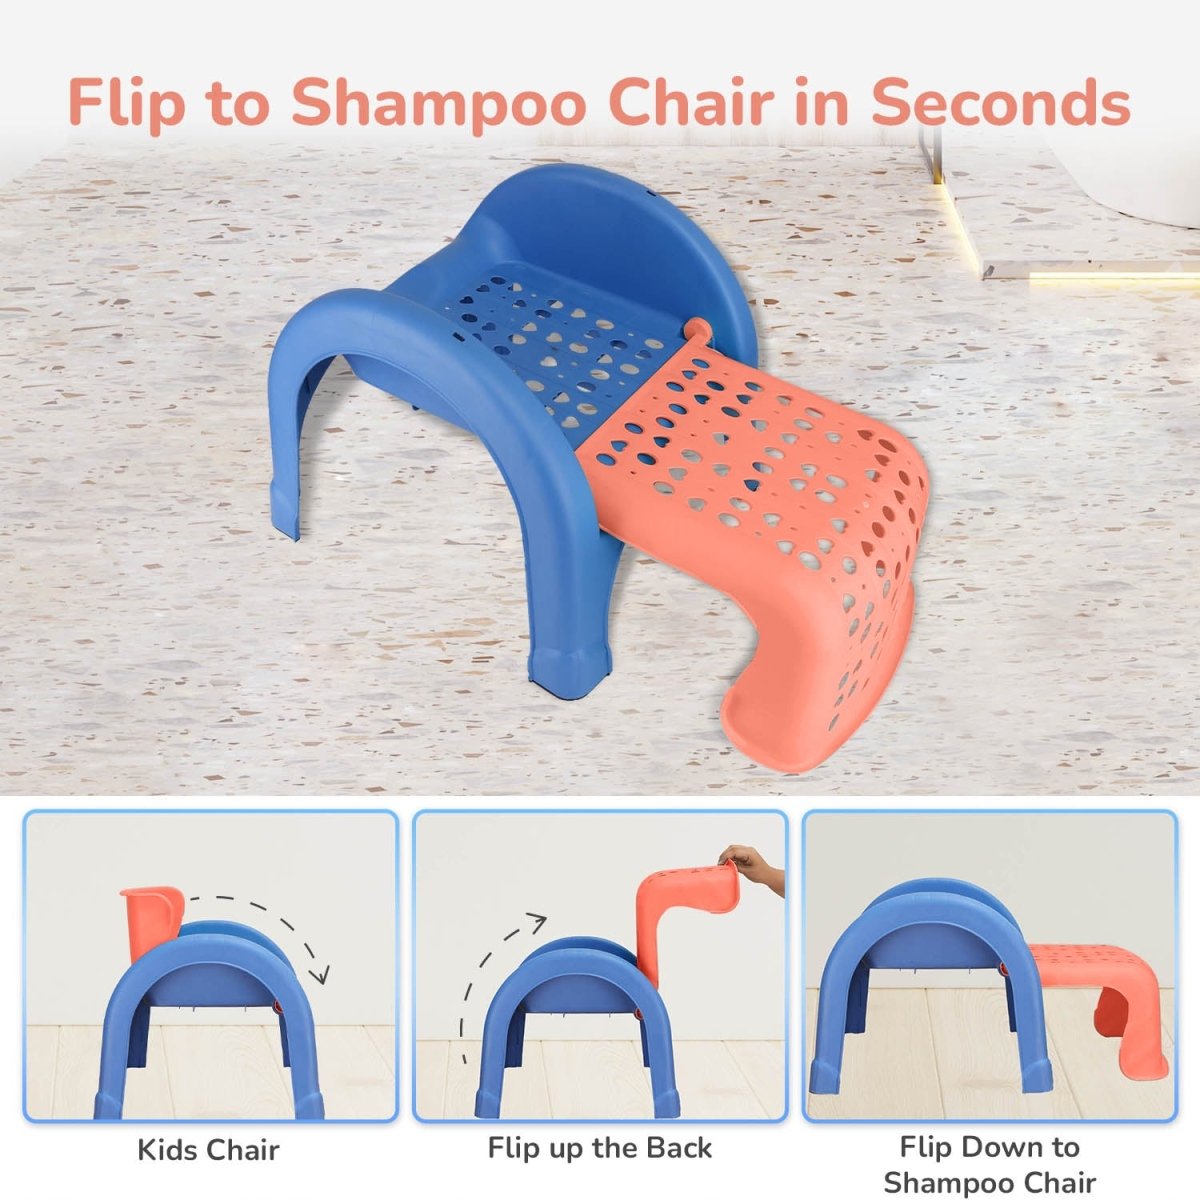 R for Rabbit Jelly Bean 3 In 1 Multi-Functional Kids Chair- Orange Blue - FNJBOB01